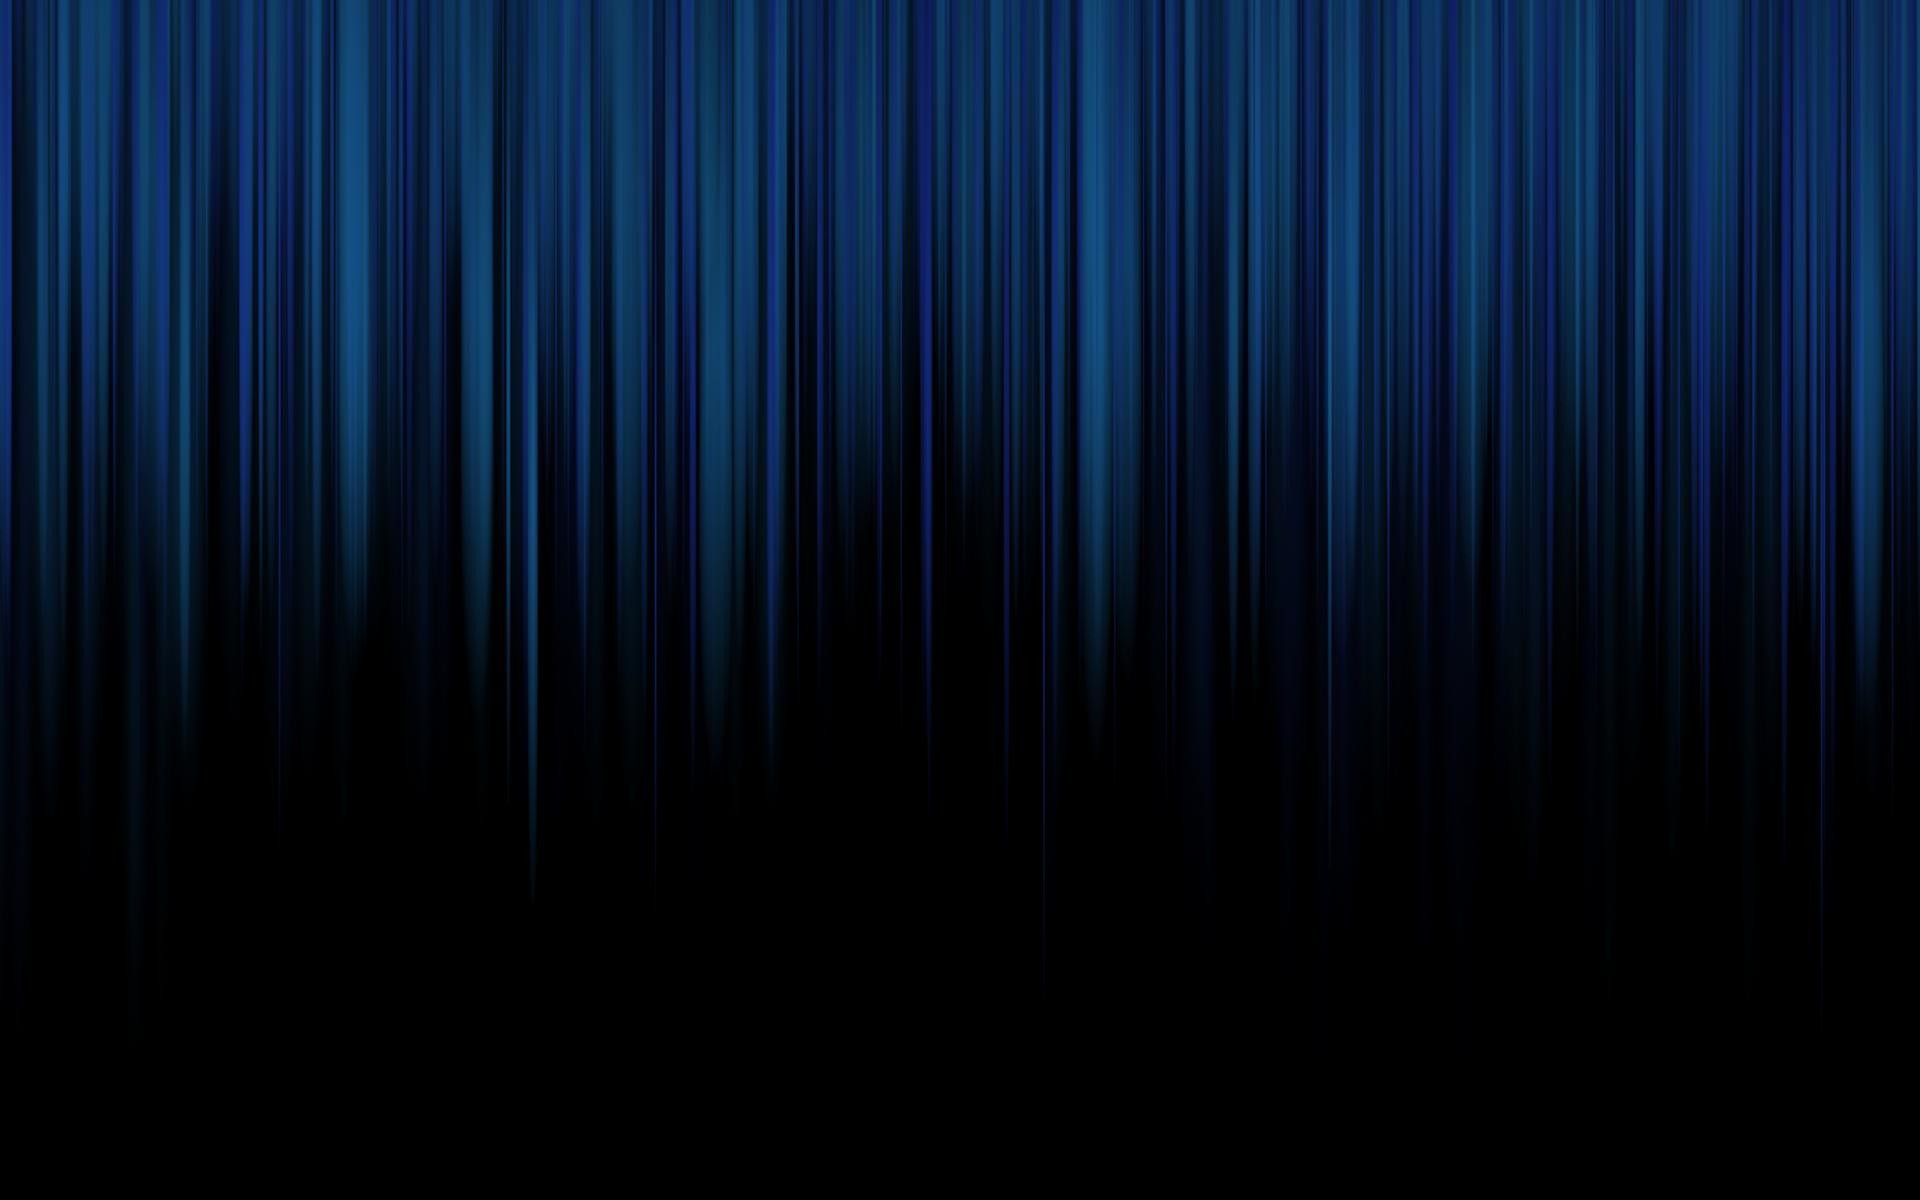 Blue vertical lines on a black background - Dark blue